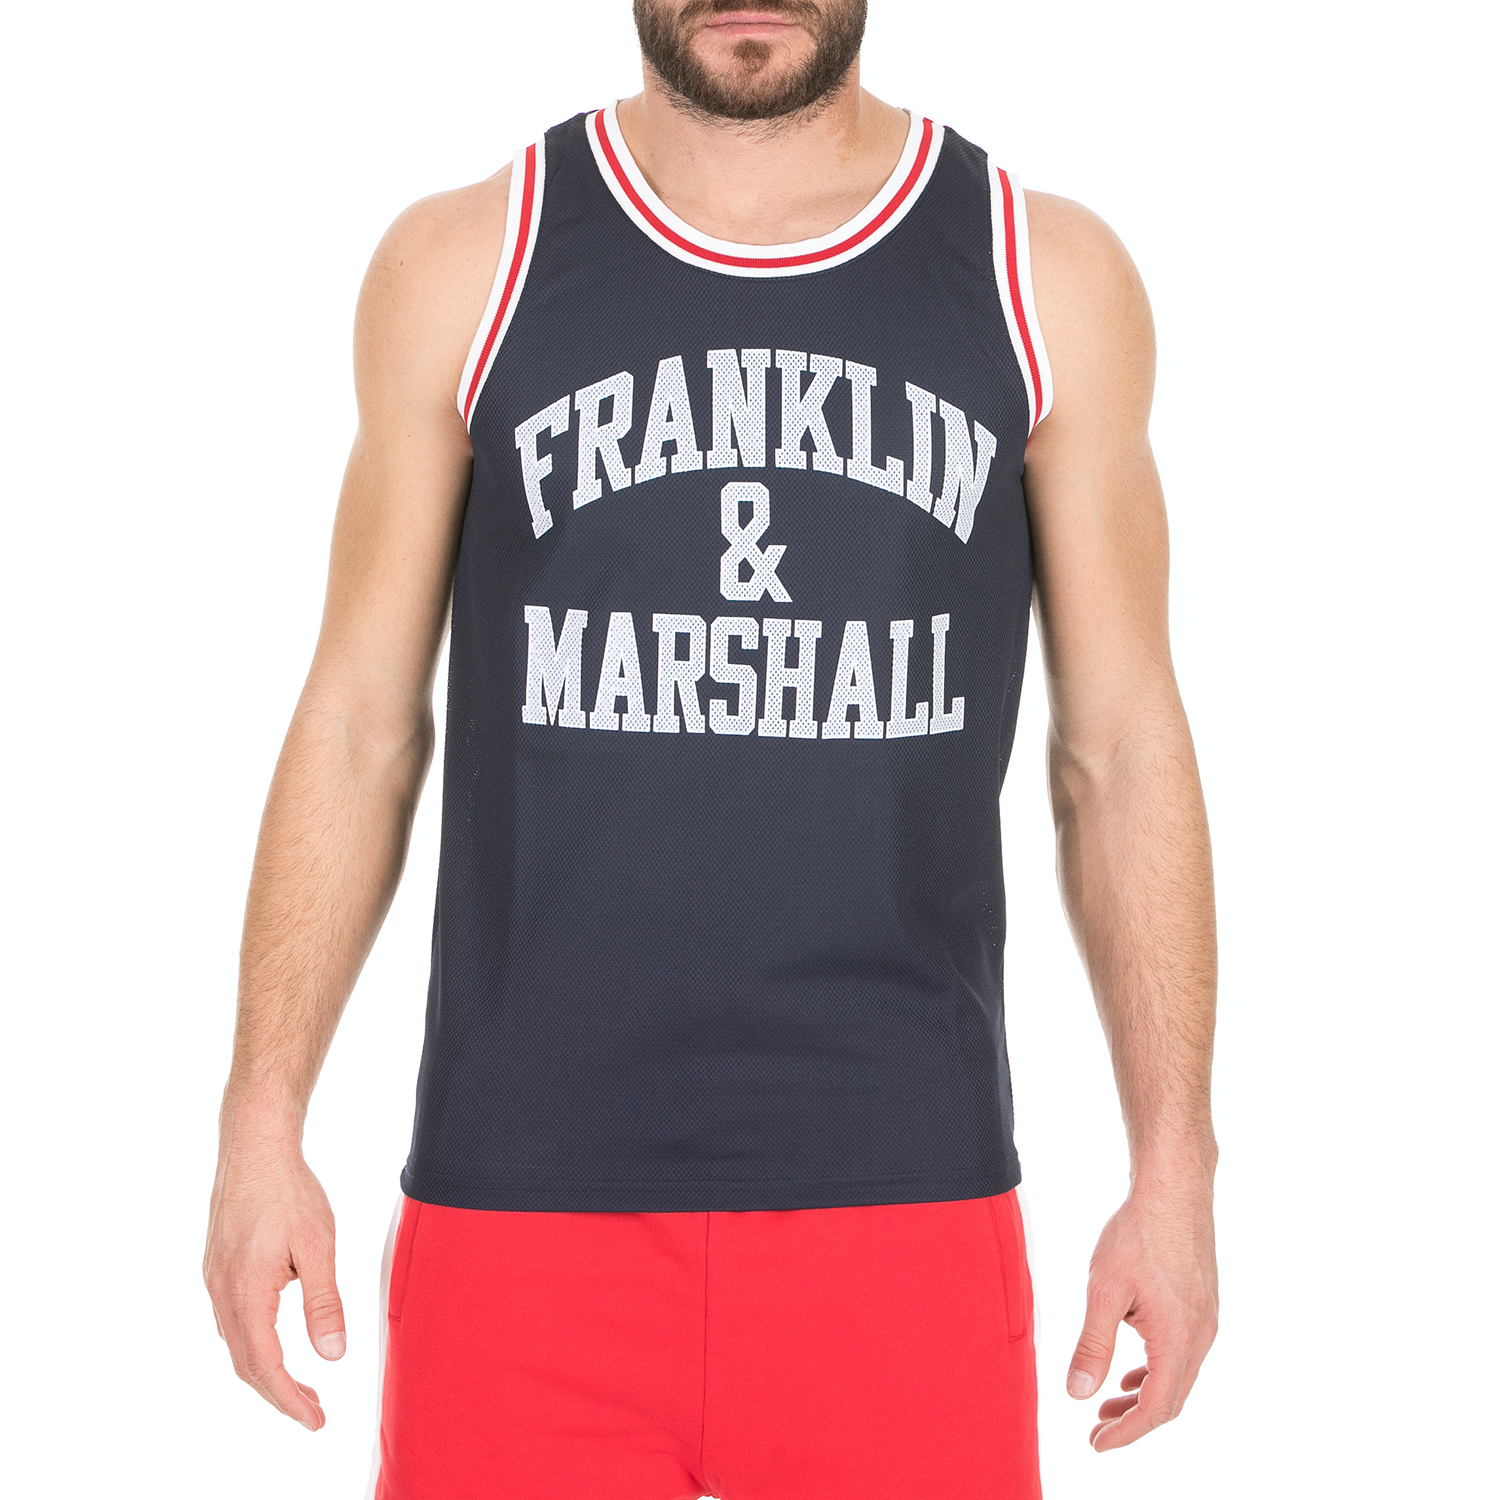 FRANKLIN & MARSHALL - Ανδρικό t-shirt FRANKLIN & MARSHALL μπλε Ανδρικά/Ρούχα/Μπλούζες/Αμάνικες